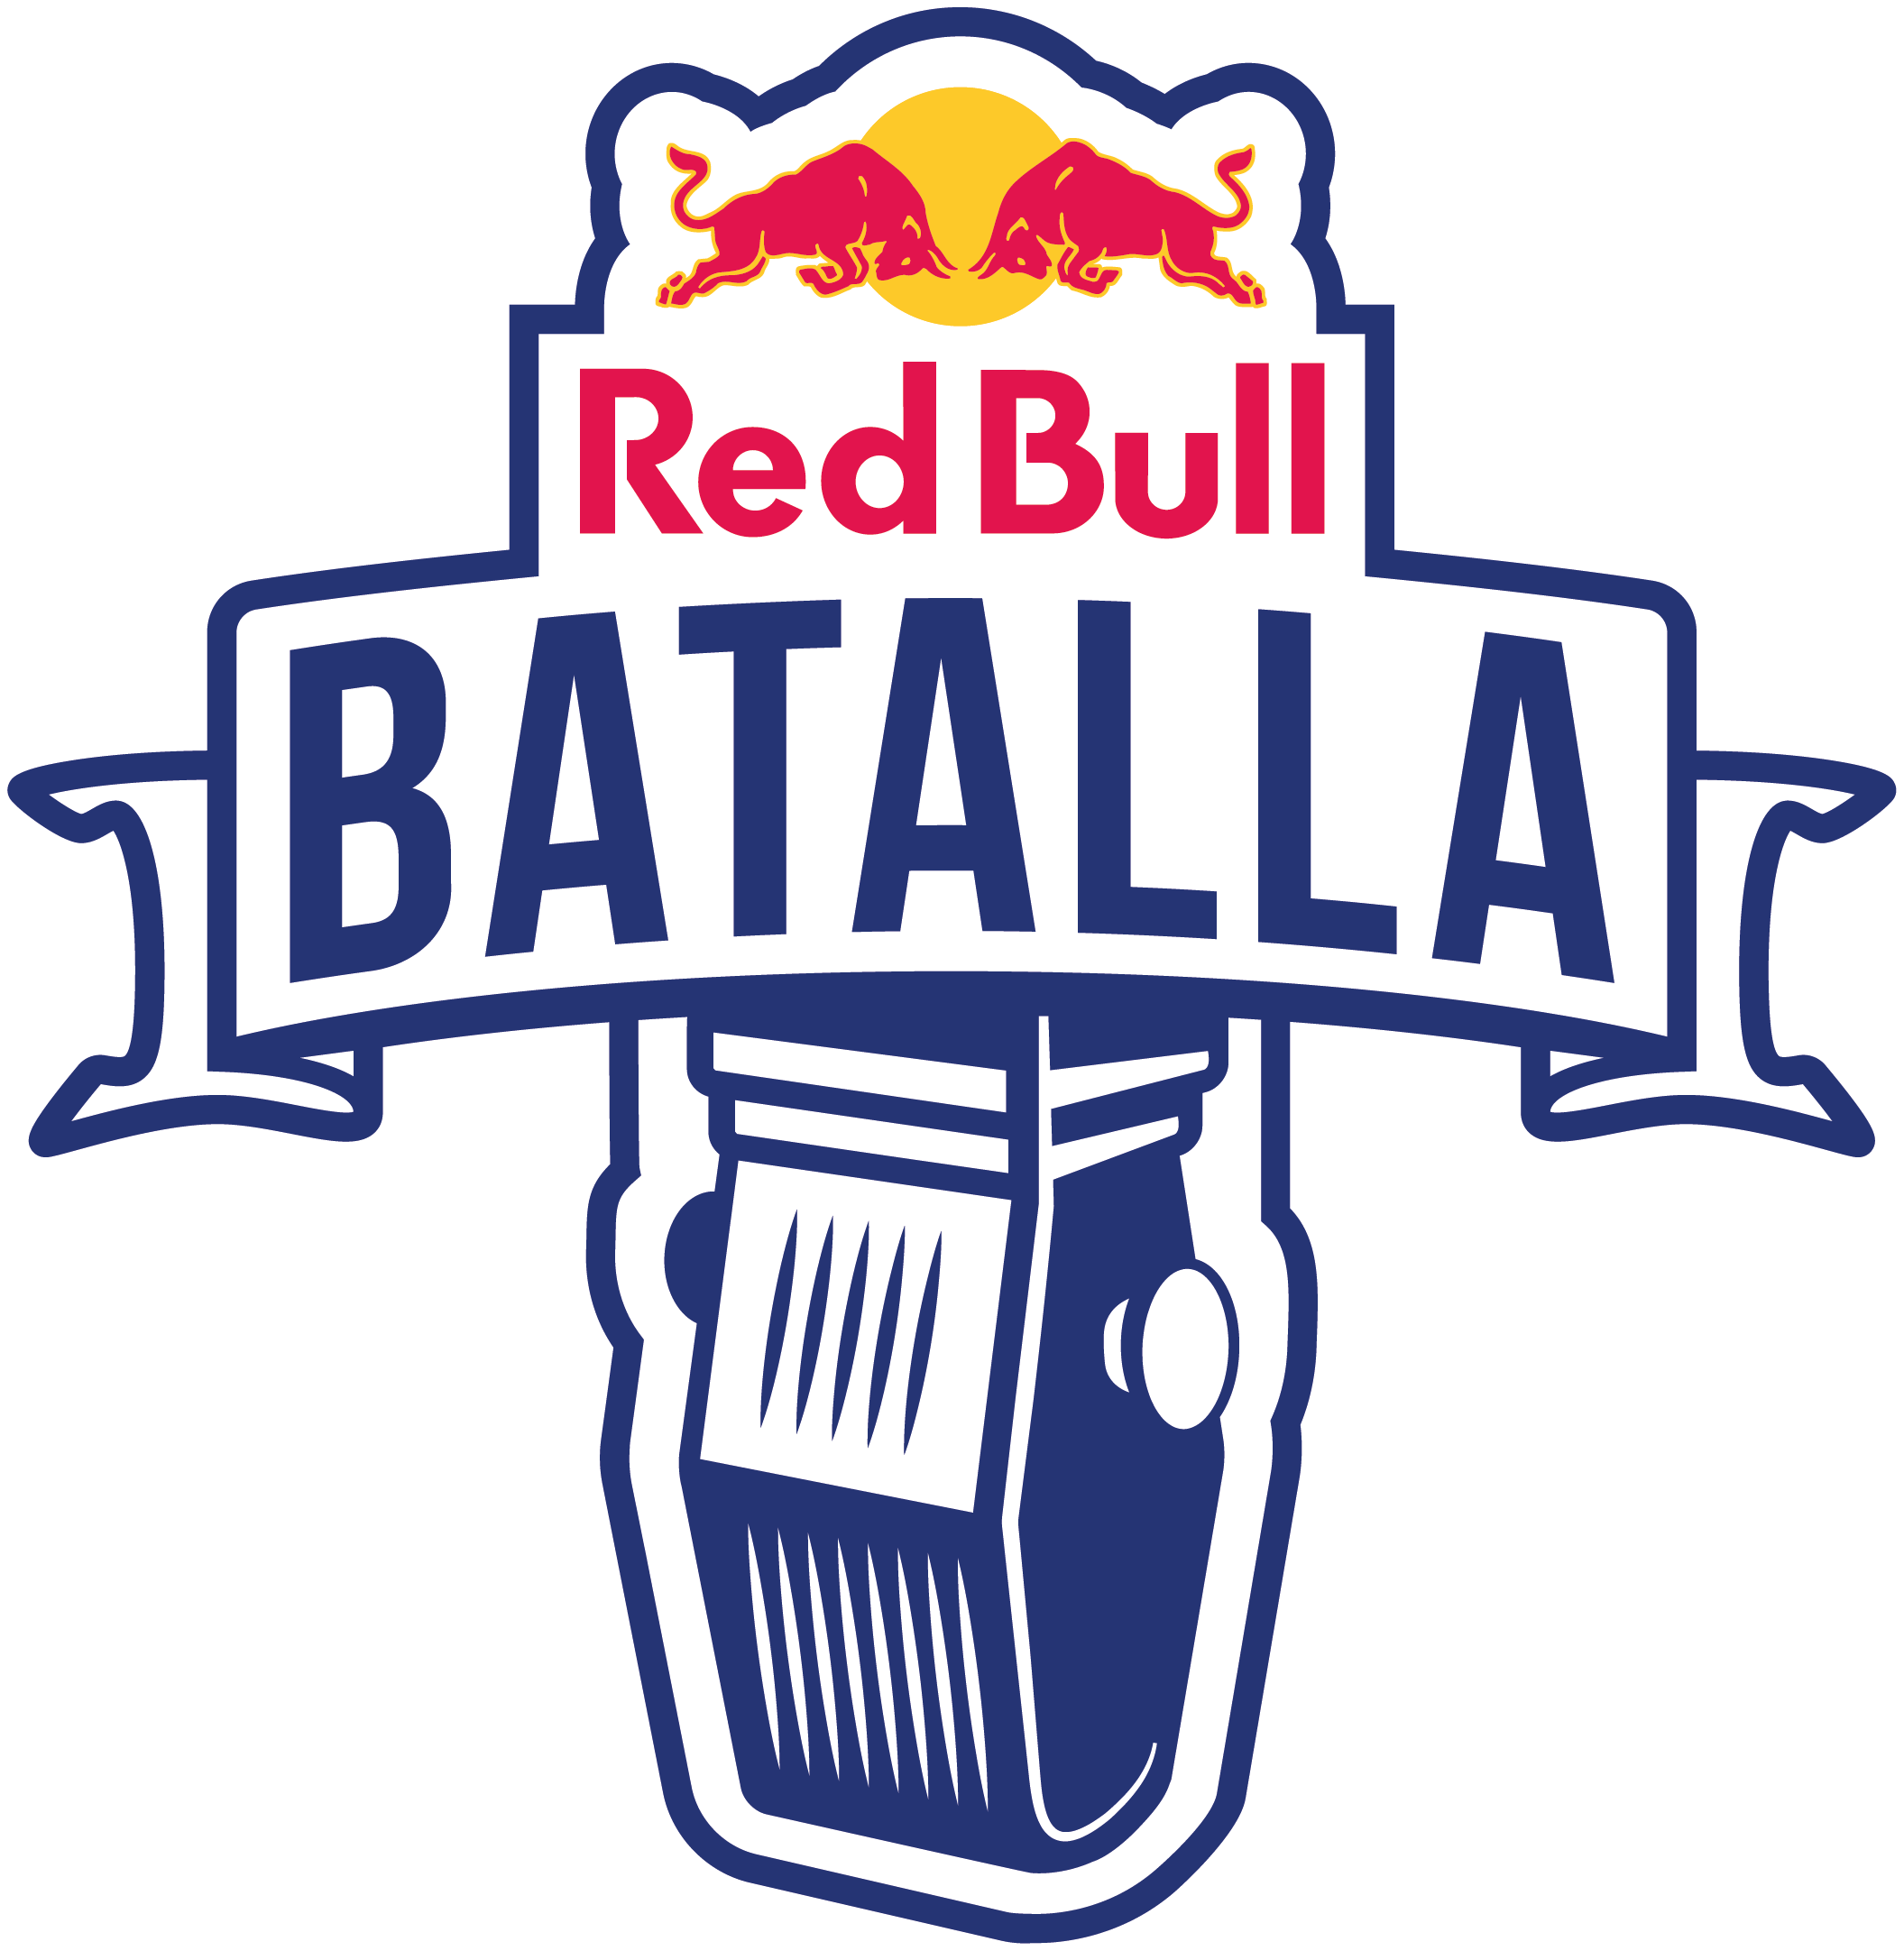 Red Bull - Wikipedia